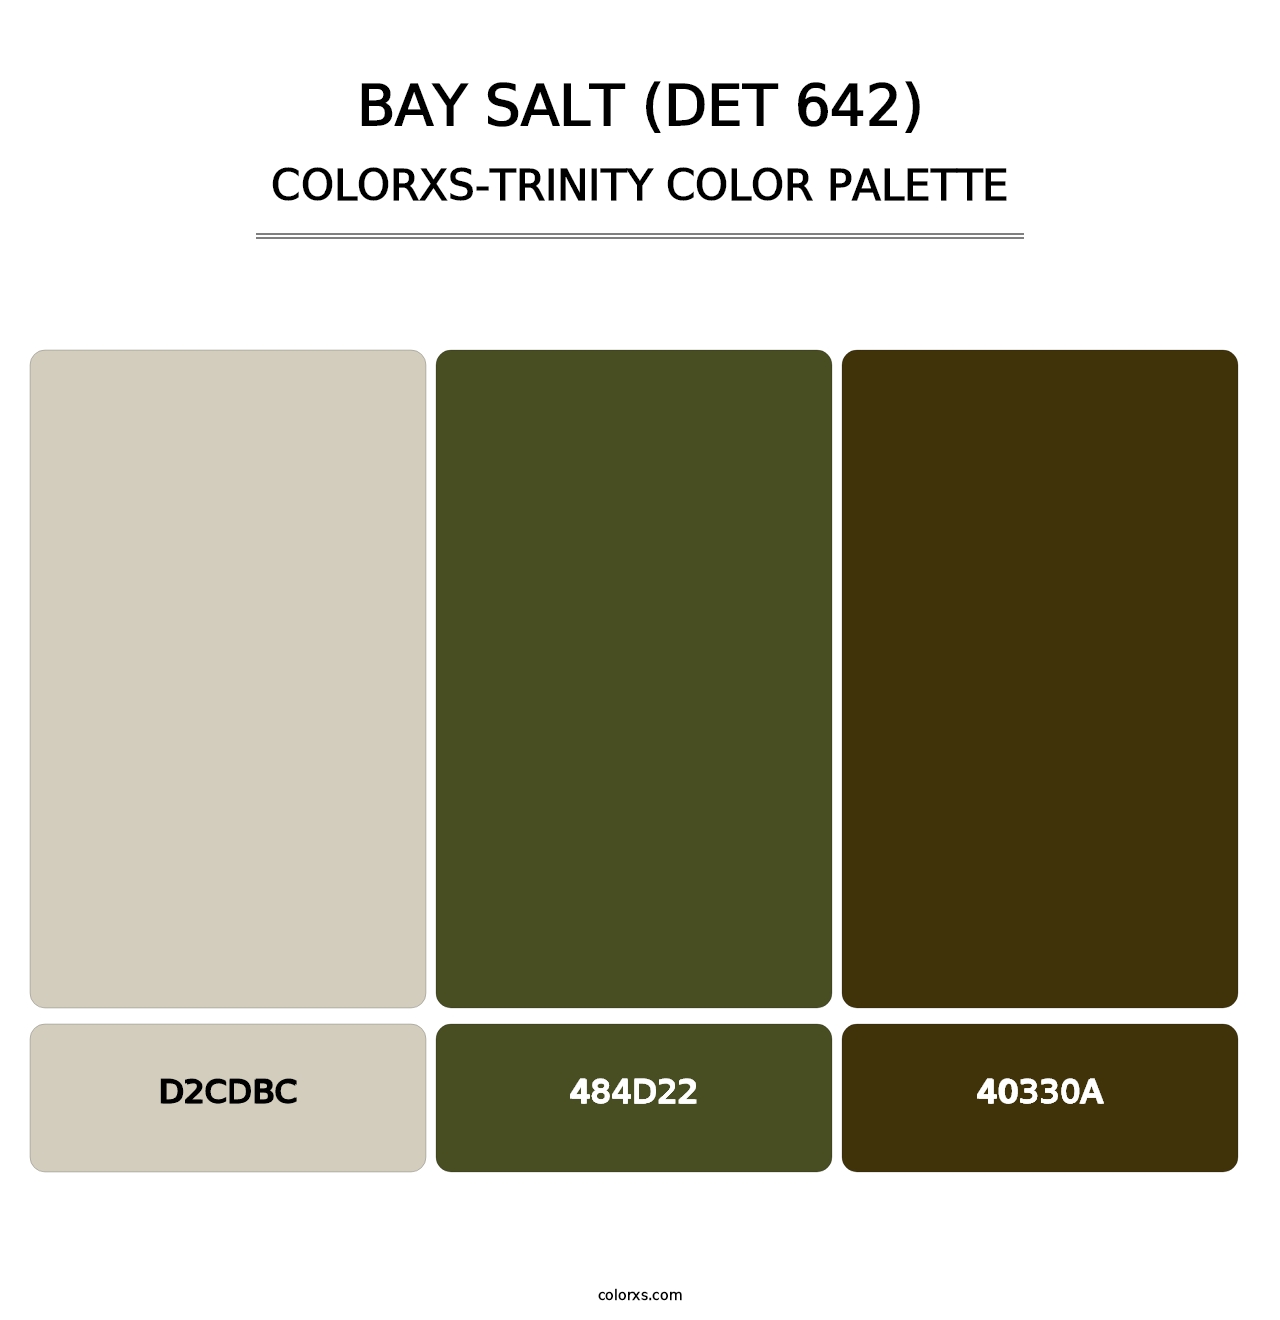 Bay Salt (DET 642) - Colorxs Trinity Palette